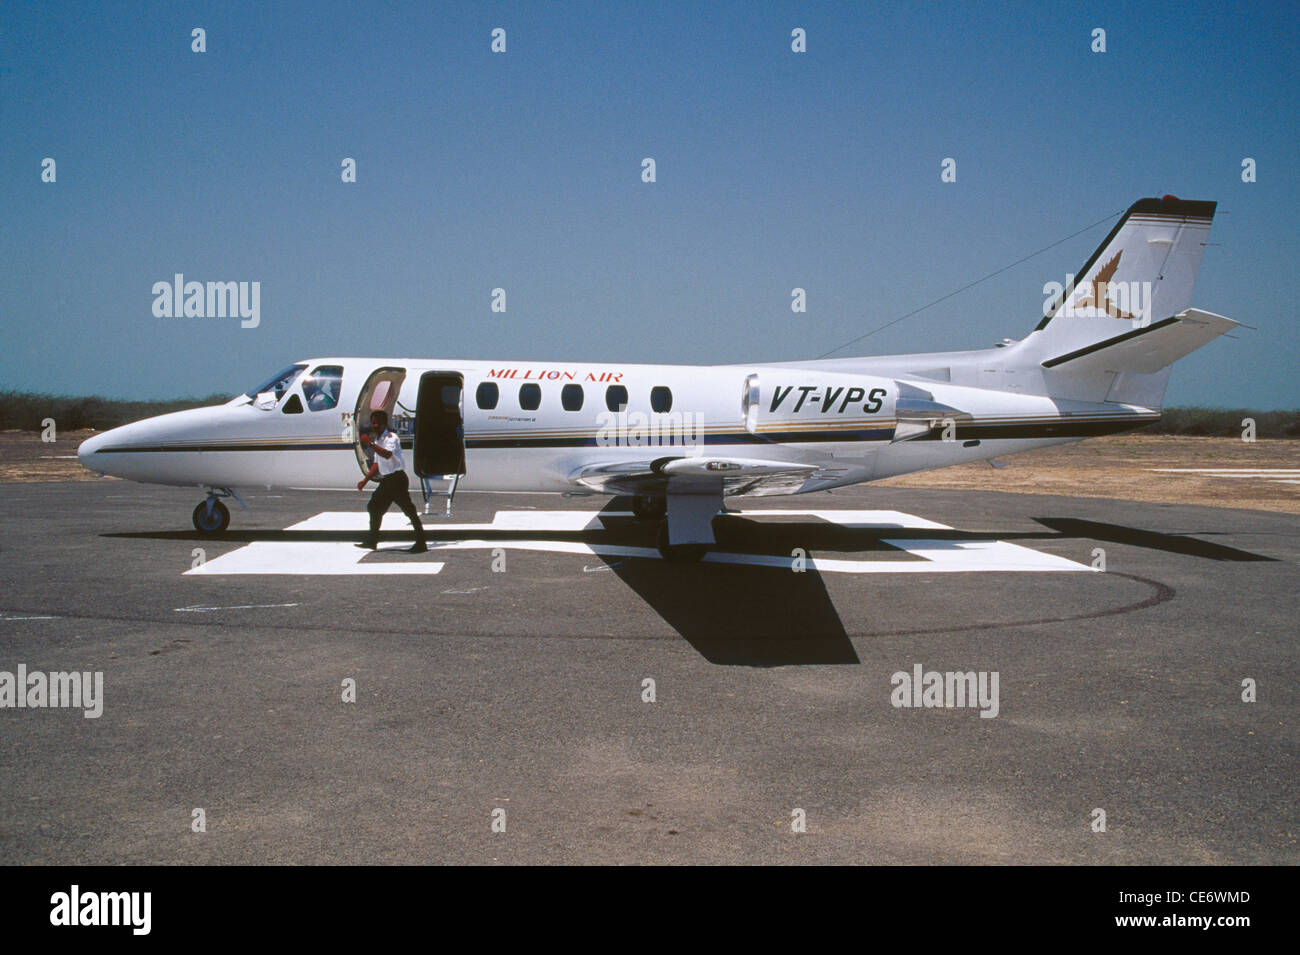 Million air ; VT - VPS ; Cessna jet business Aircraft Banque D'Images